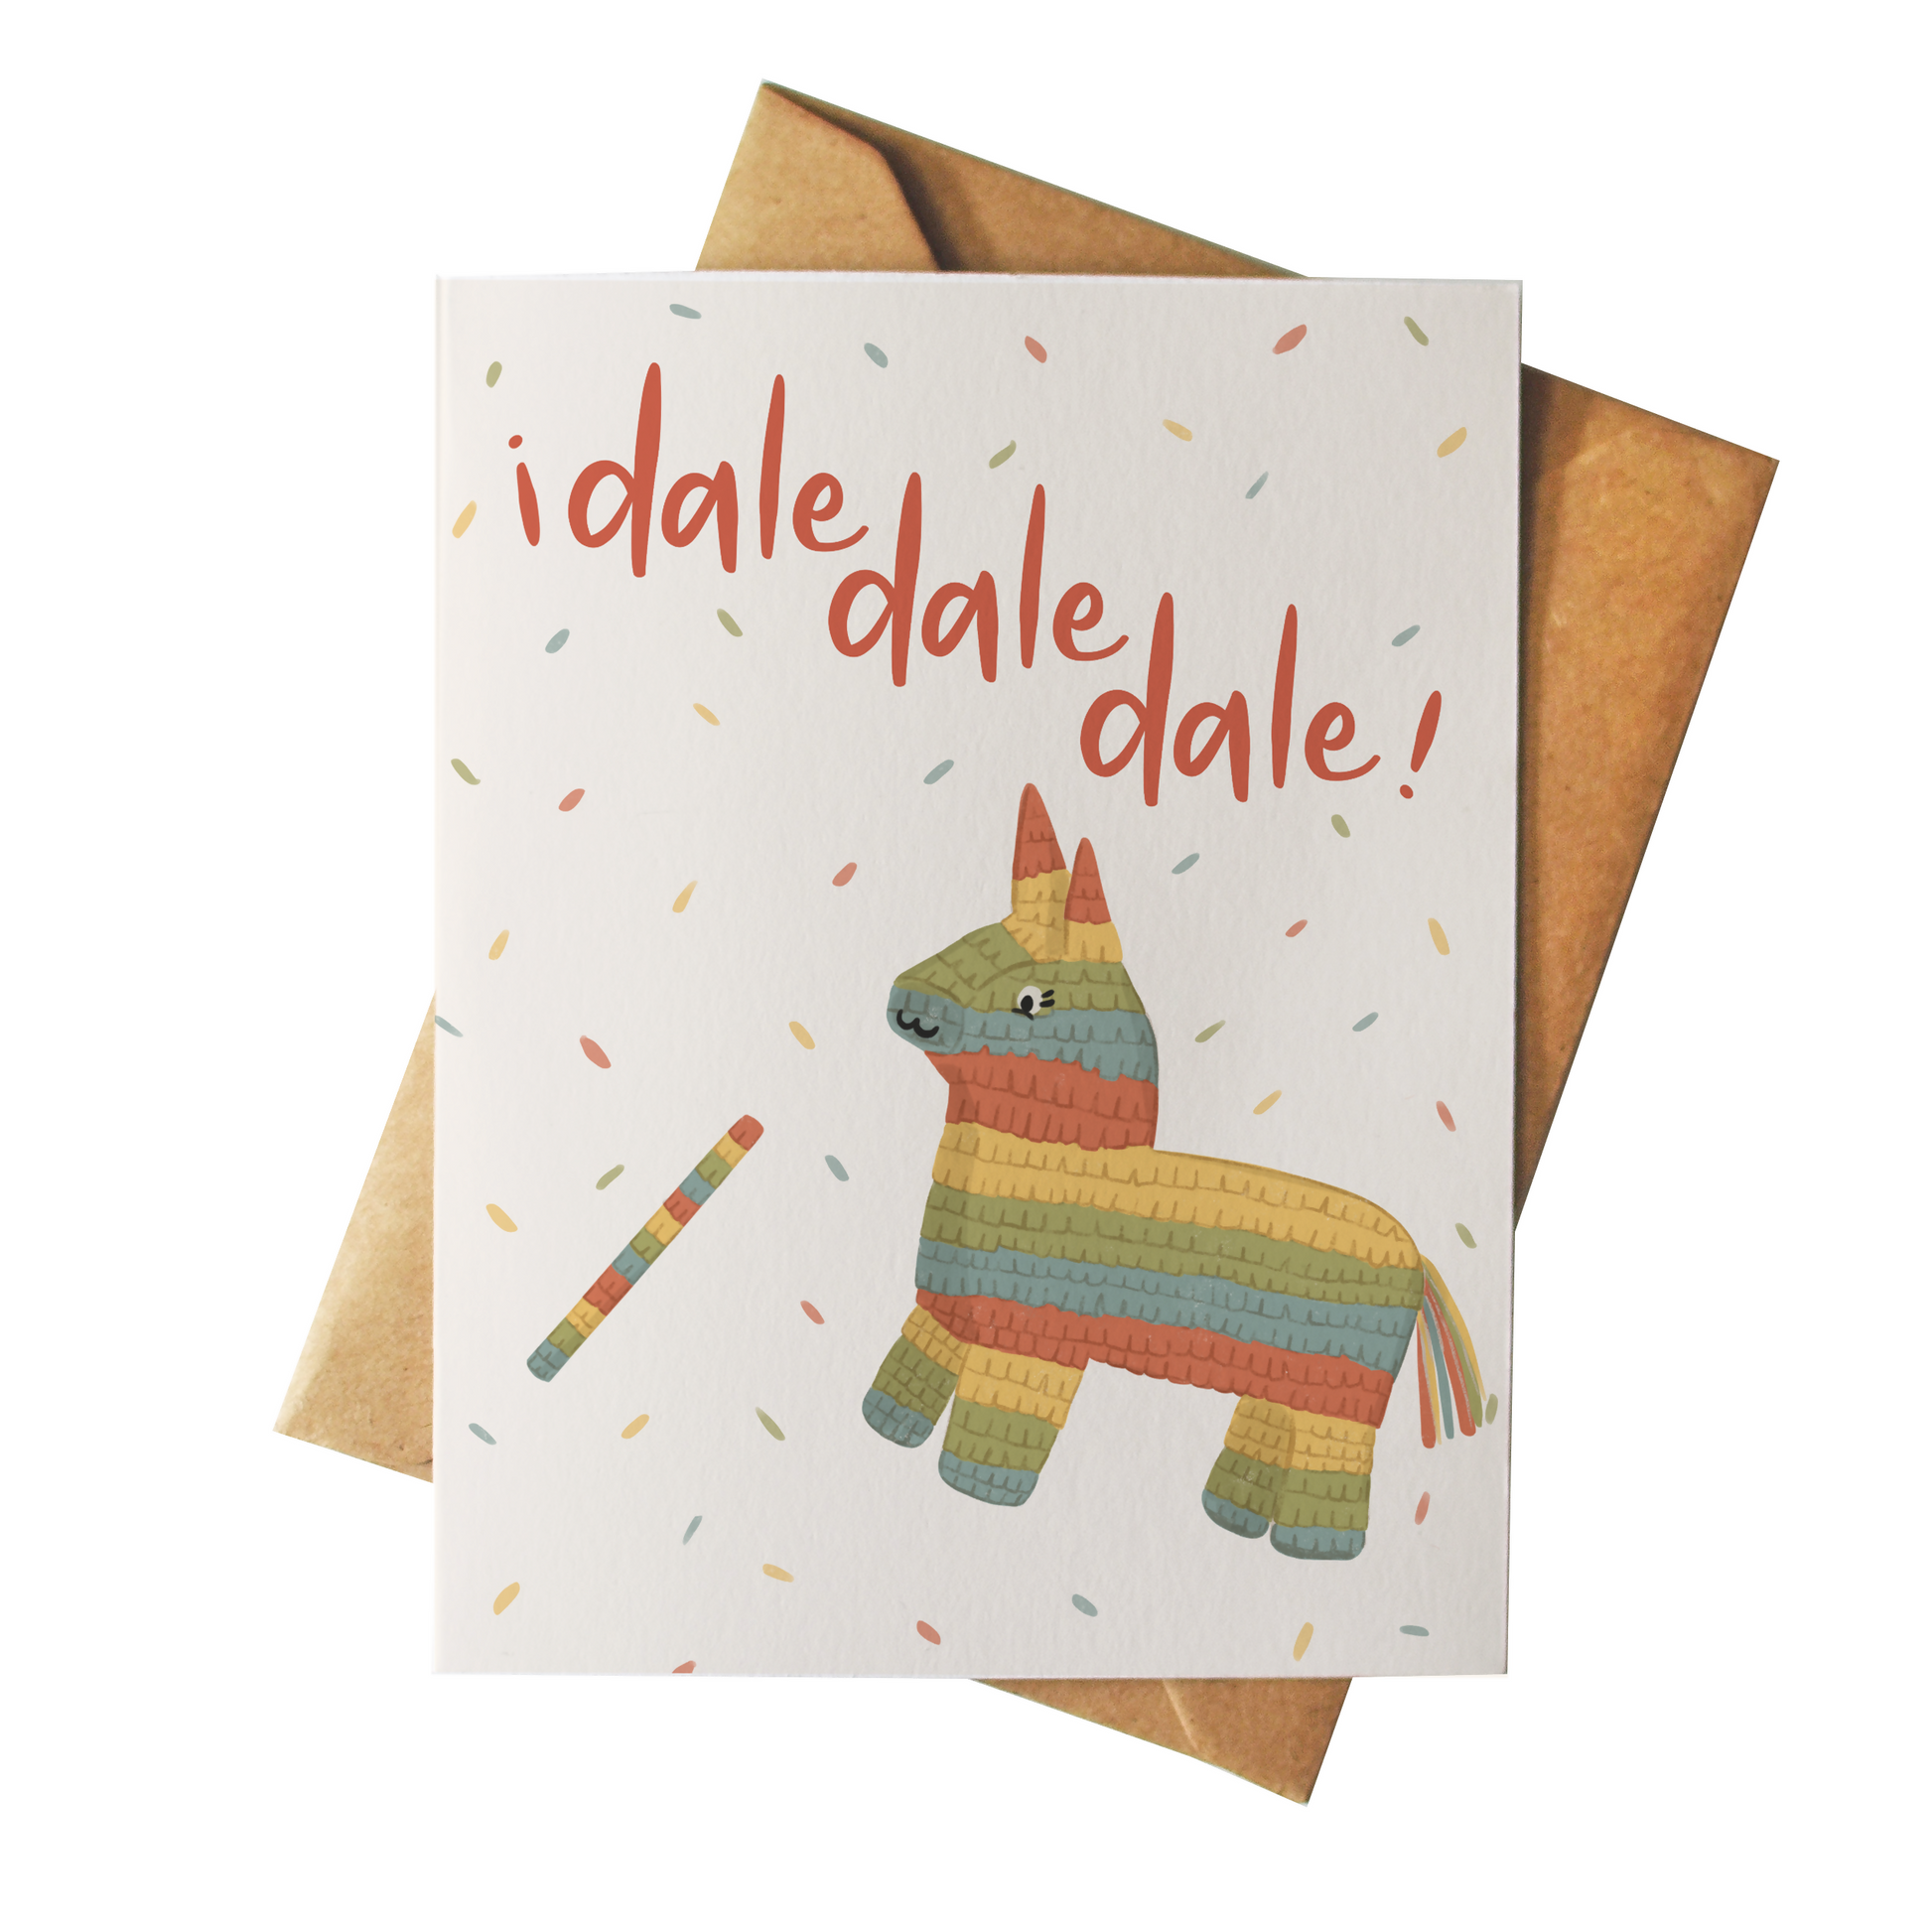 Dale Dale Dale Greeting Card - Las Ofrendas 